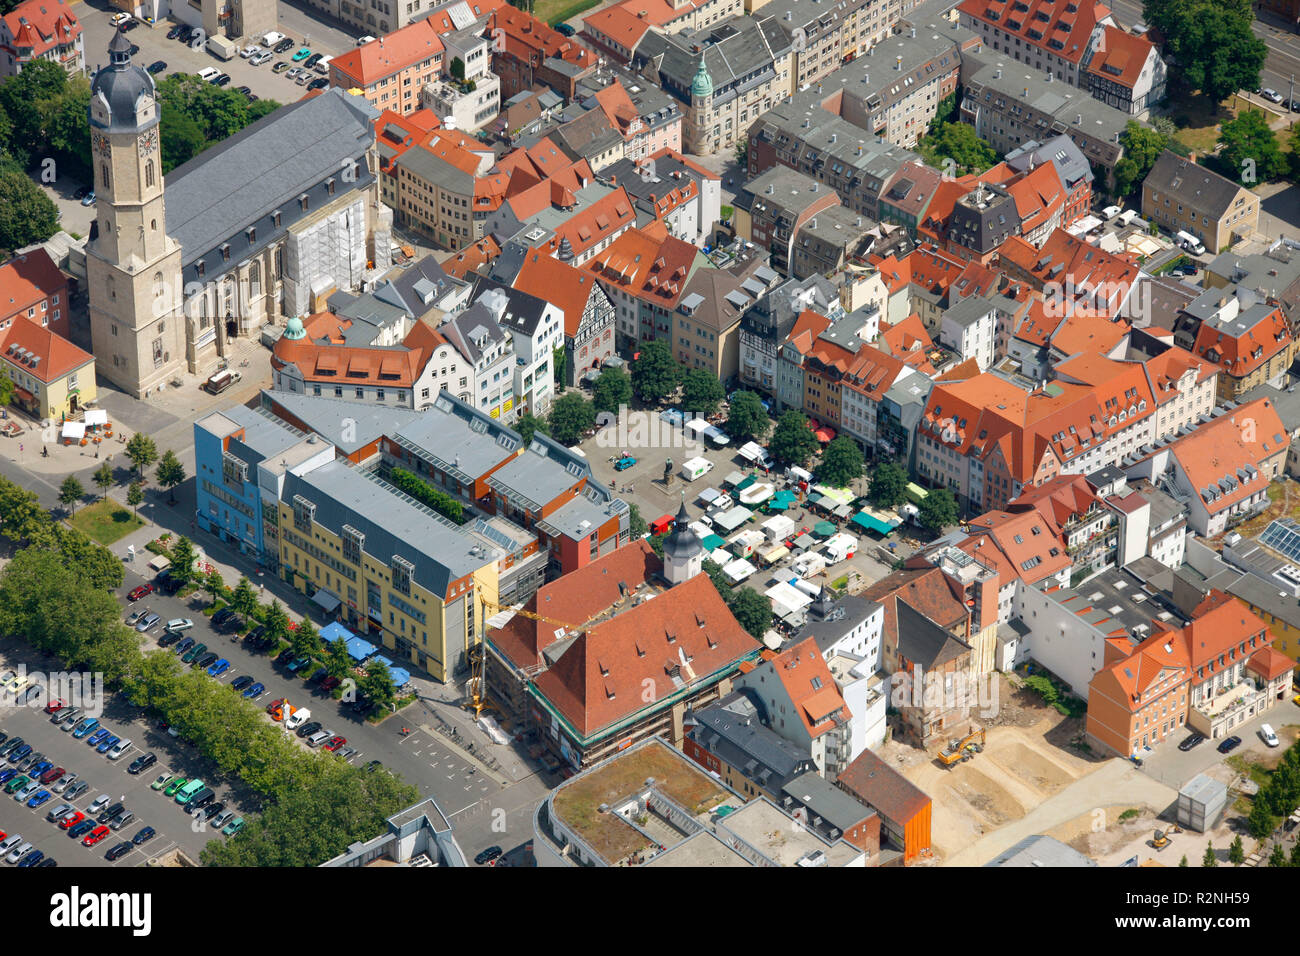 Aerial view, Jentower, Jenoptik, city center, University of Jena, aerial view, Westbahnhofstraße, Jena, Thuringia, Germany, Europe, Stock Photo